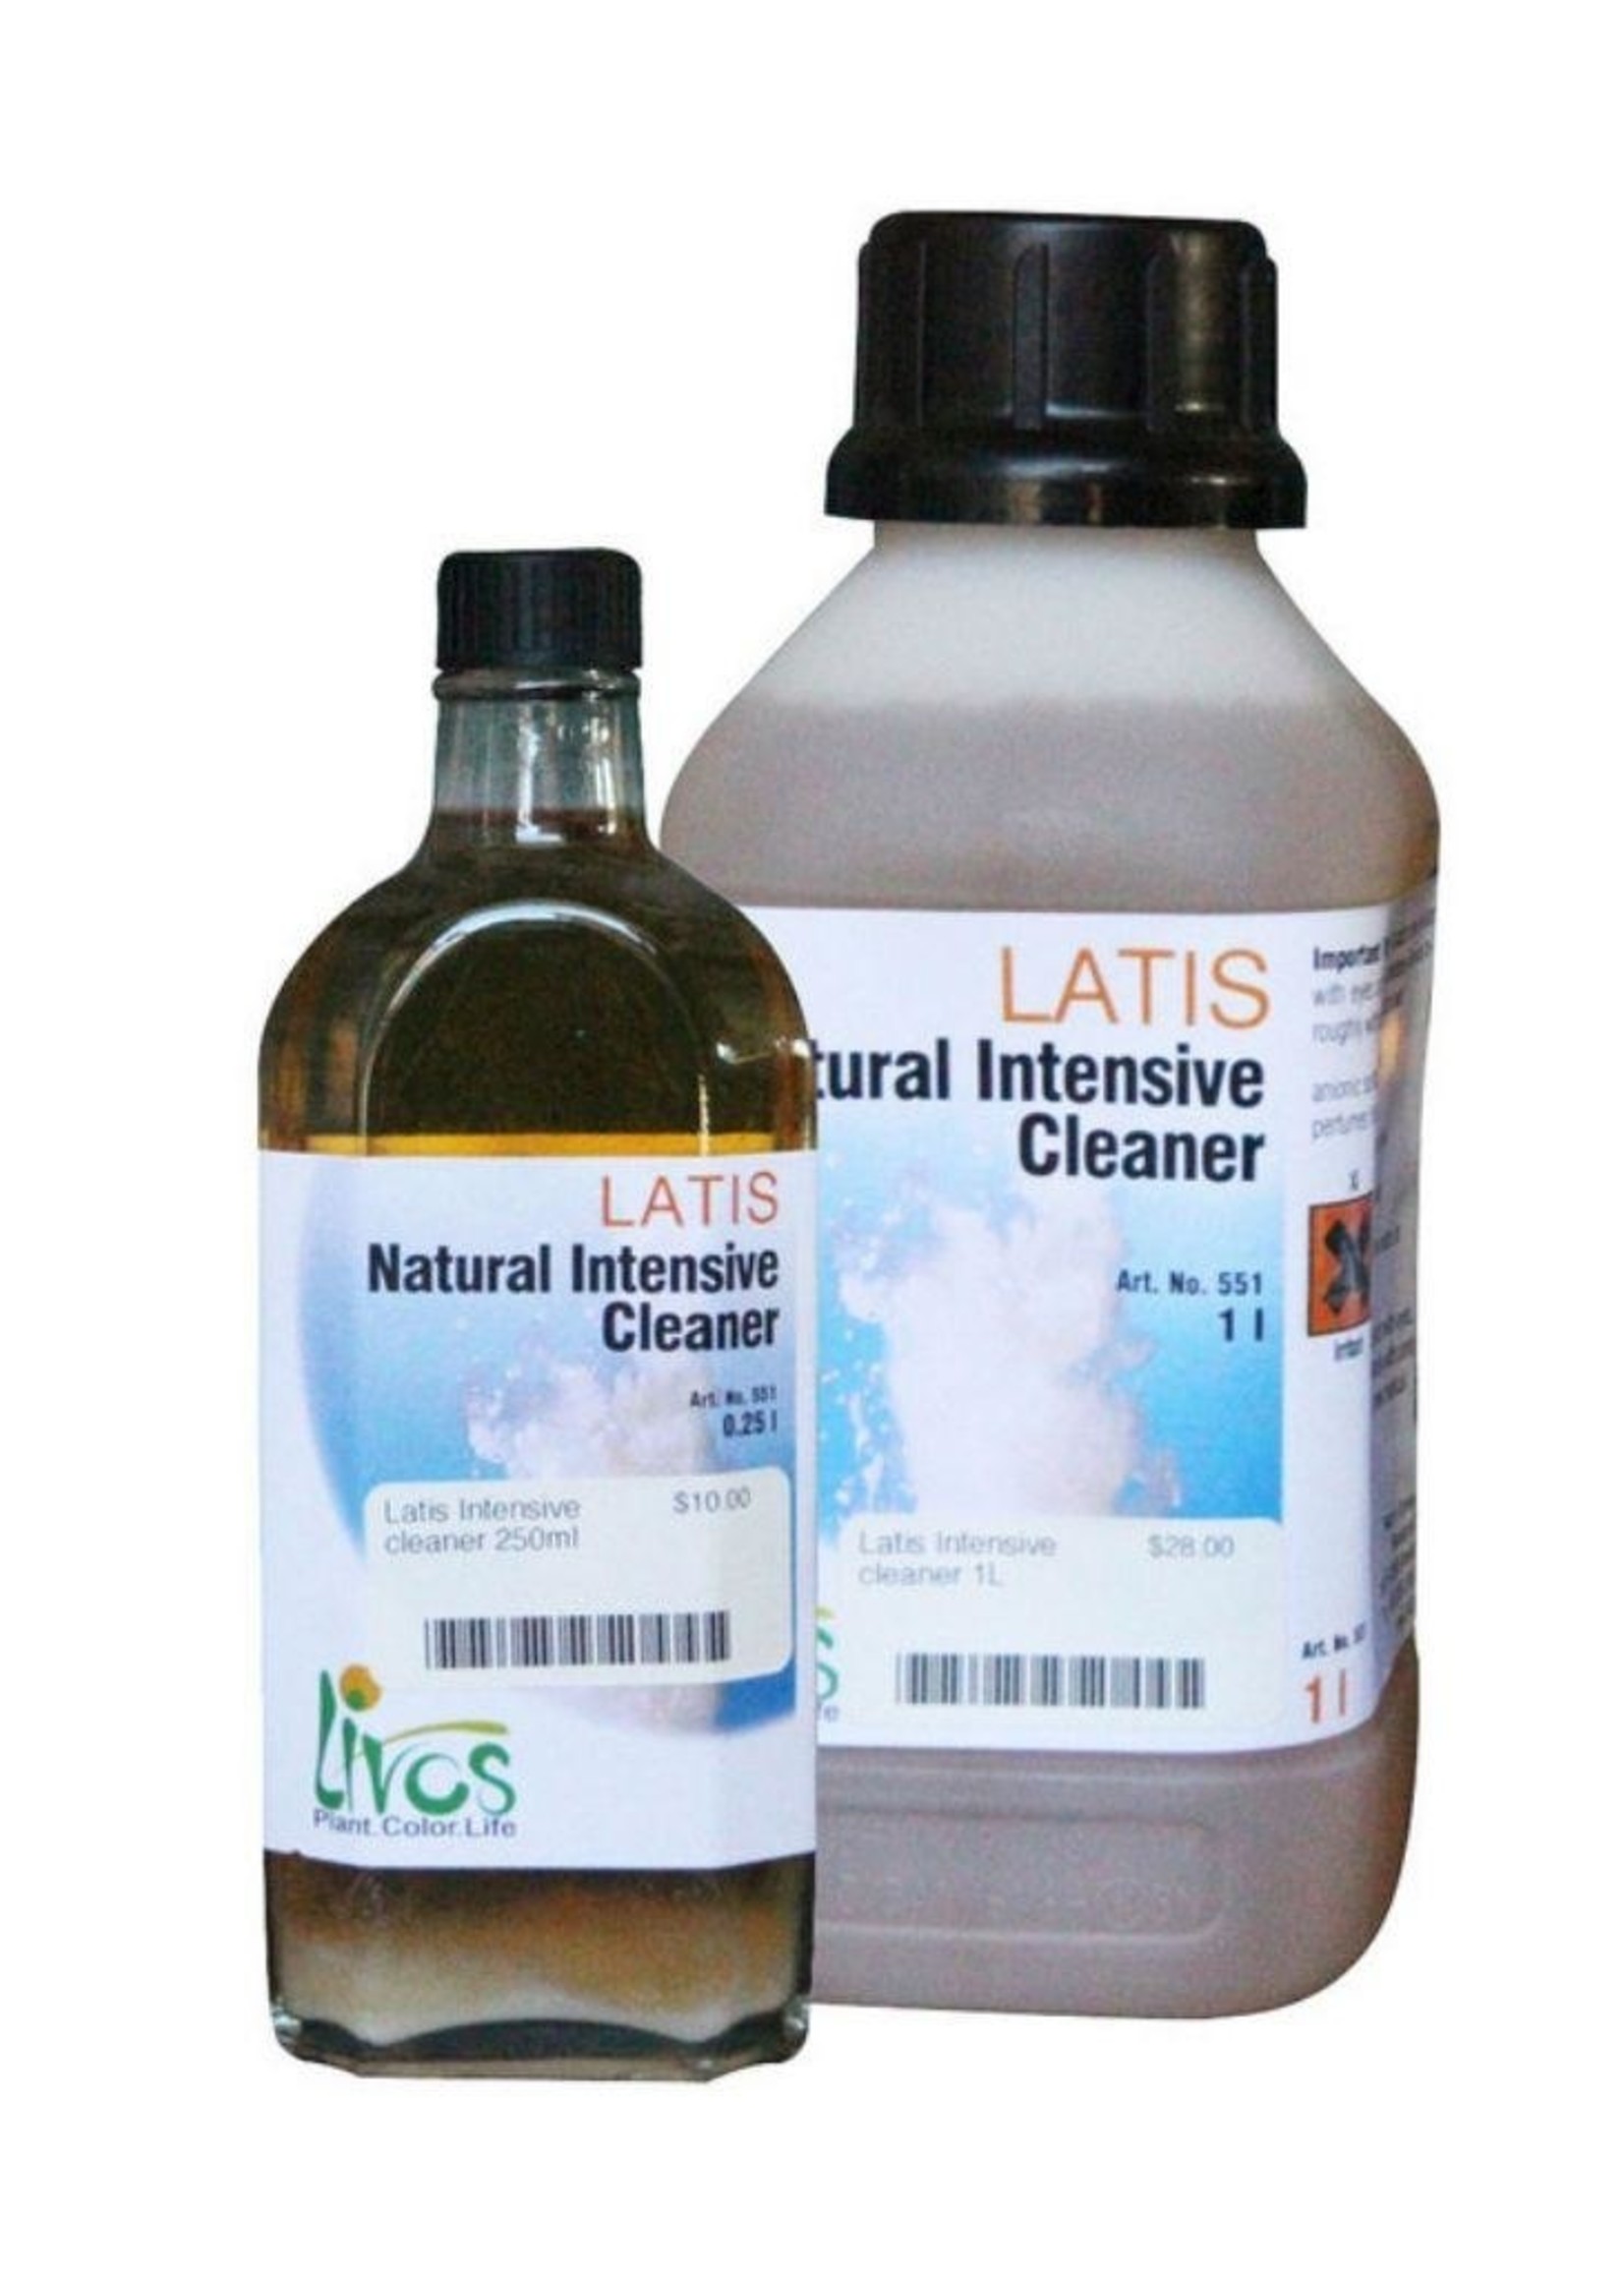 LIVOS Latis Intensive Cleaner